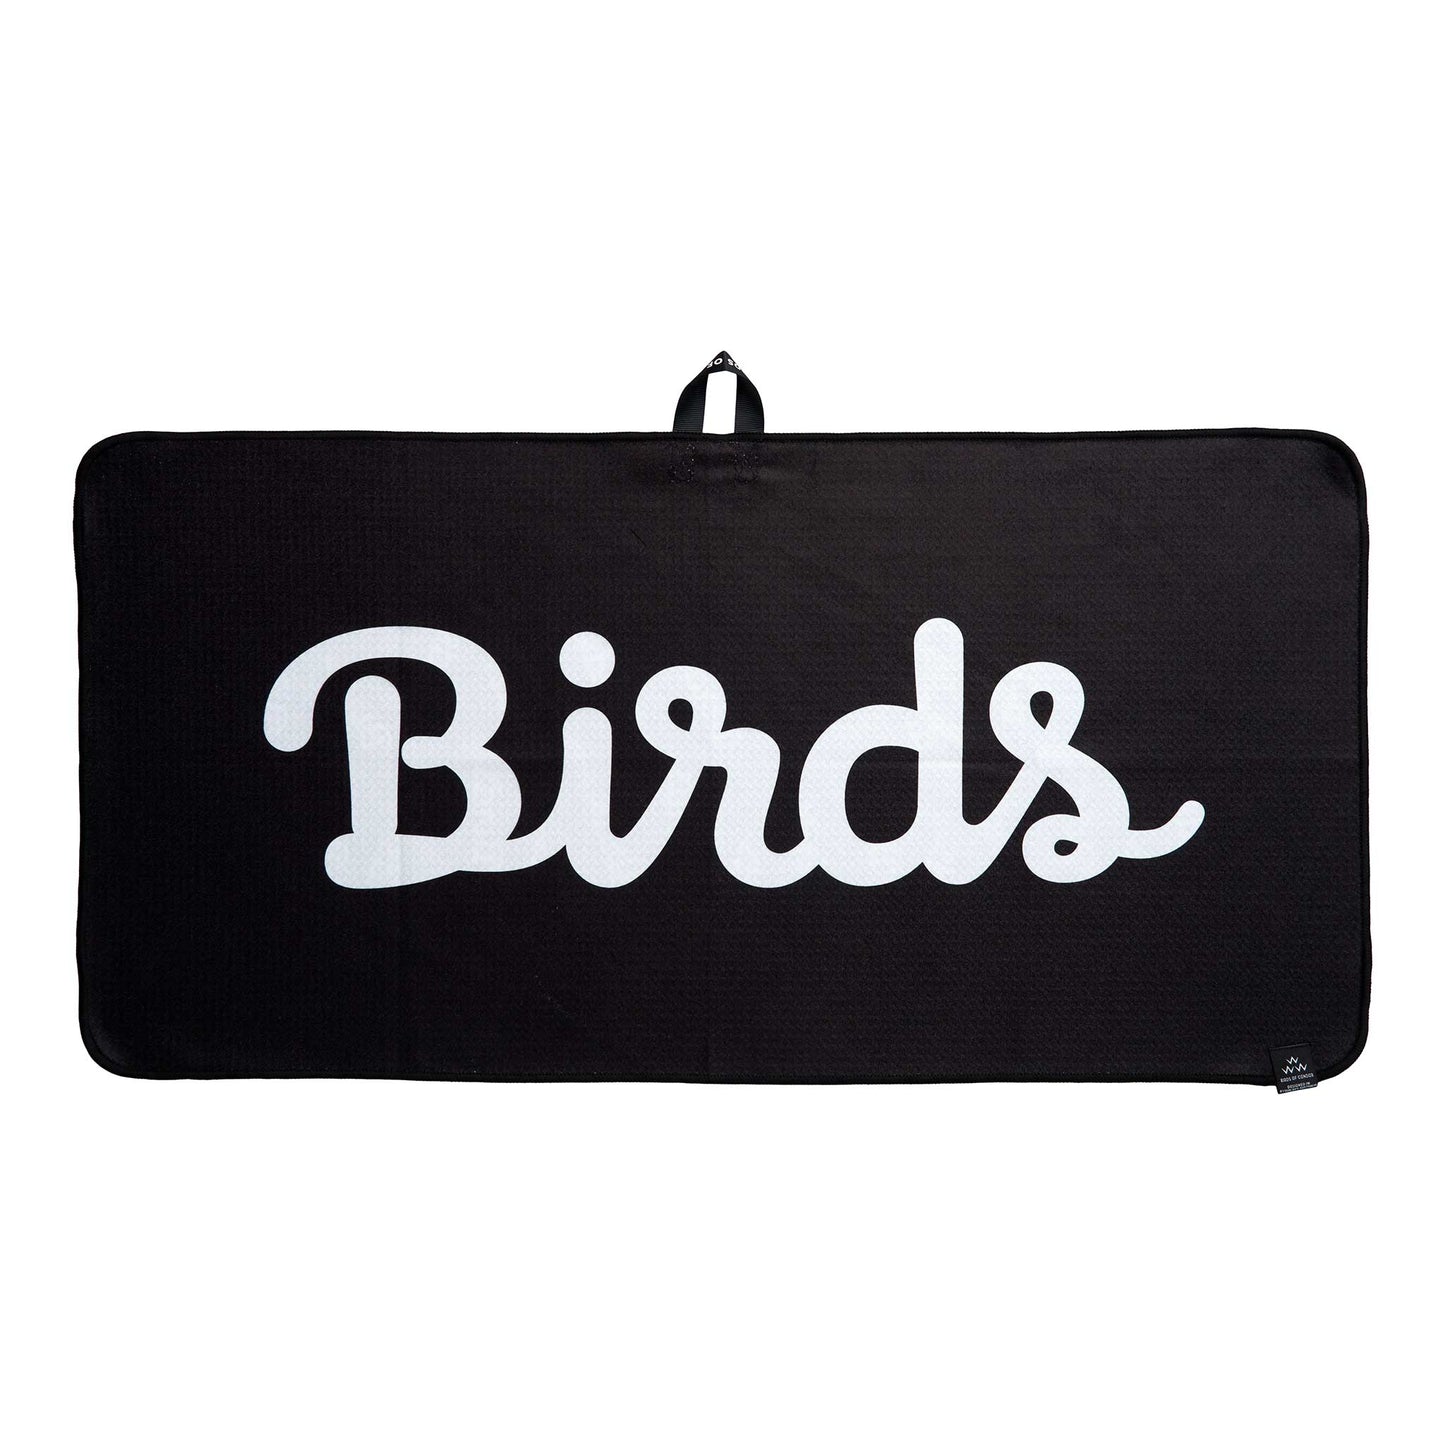 Birds Golf Towel